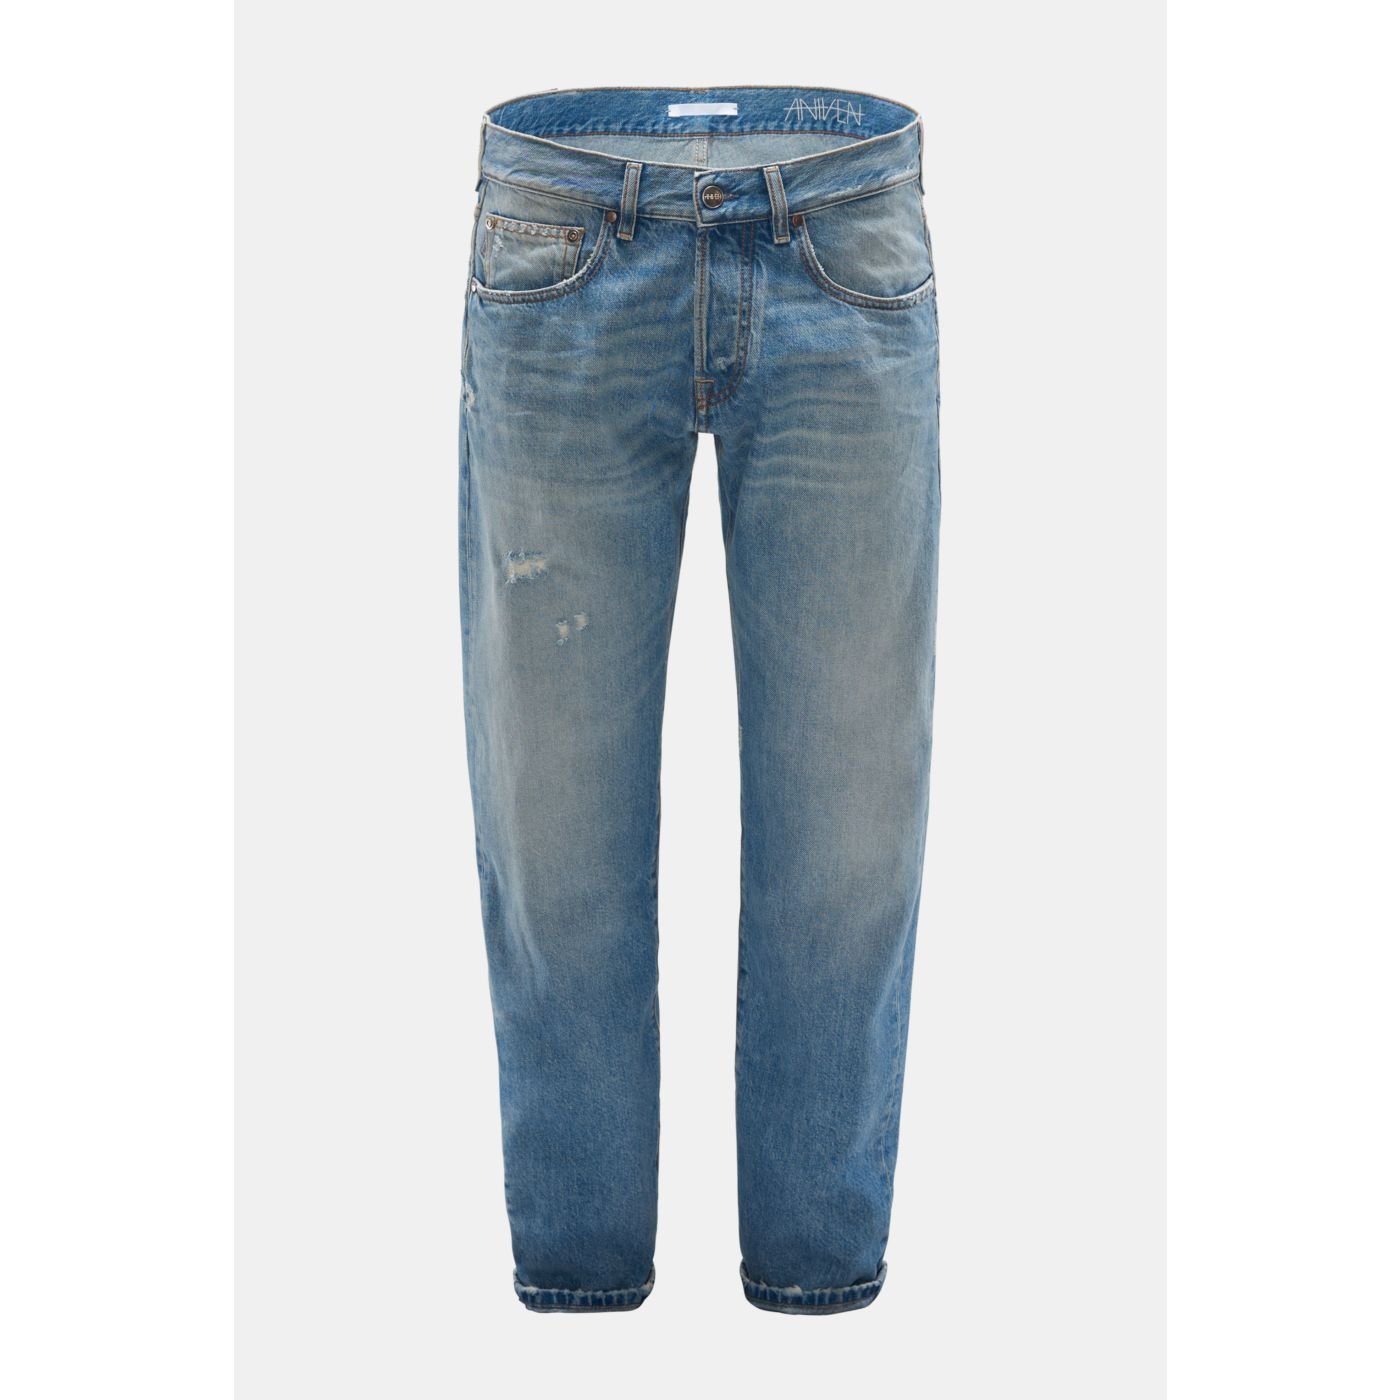 ANIVEN jeans 'Ethan Pants' light blue | BRAUN Hamburg